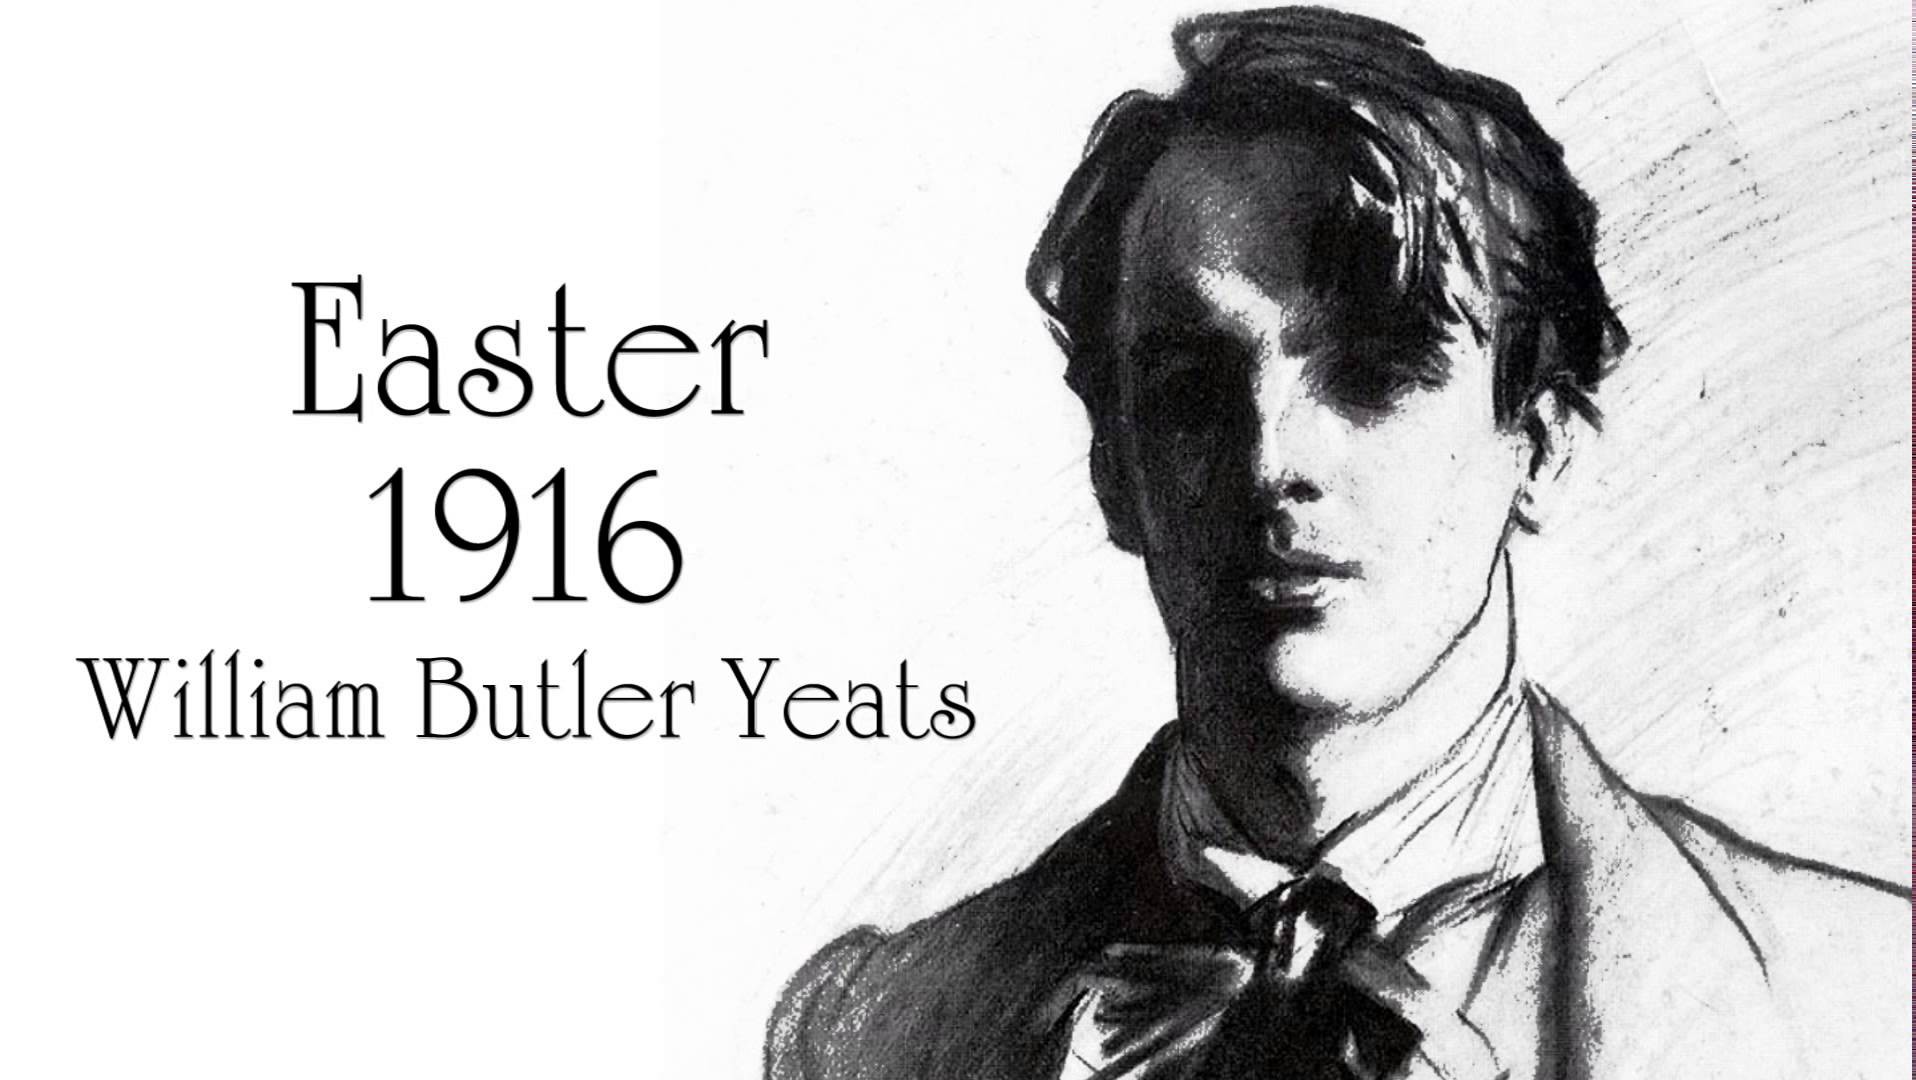 Contextualizing Yeats - Literary Analyses - Medium